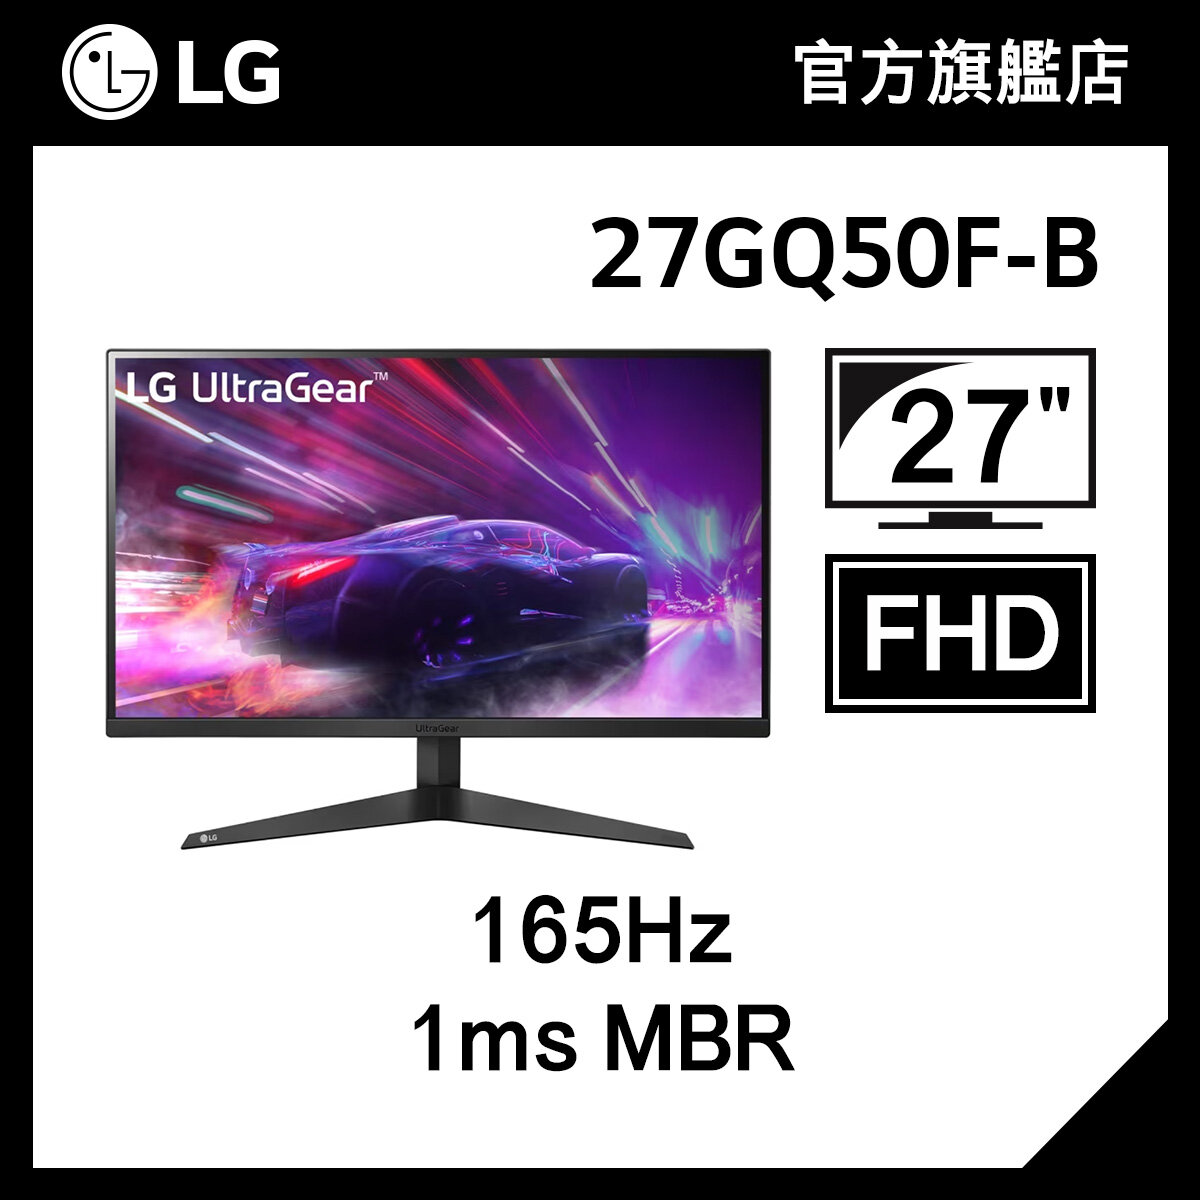 LG UltraGear™ 27" 全高清遊戲顯示器, 165Hz, 1ms MBR